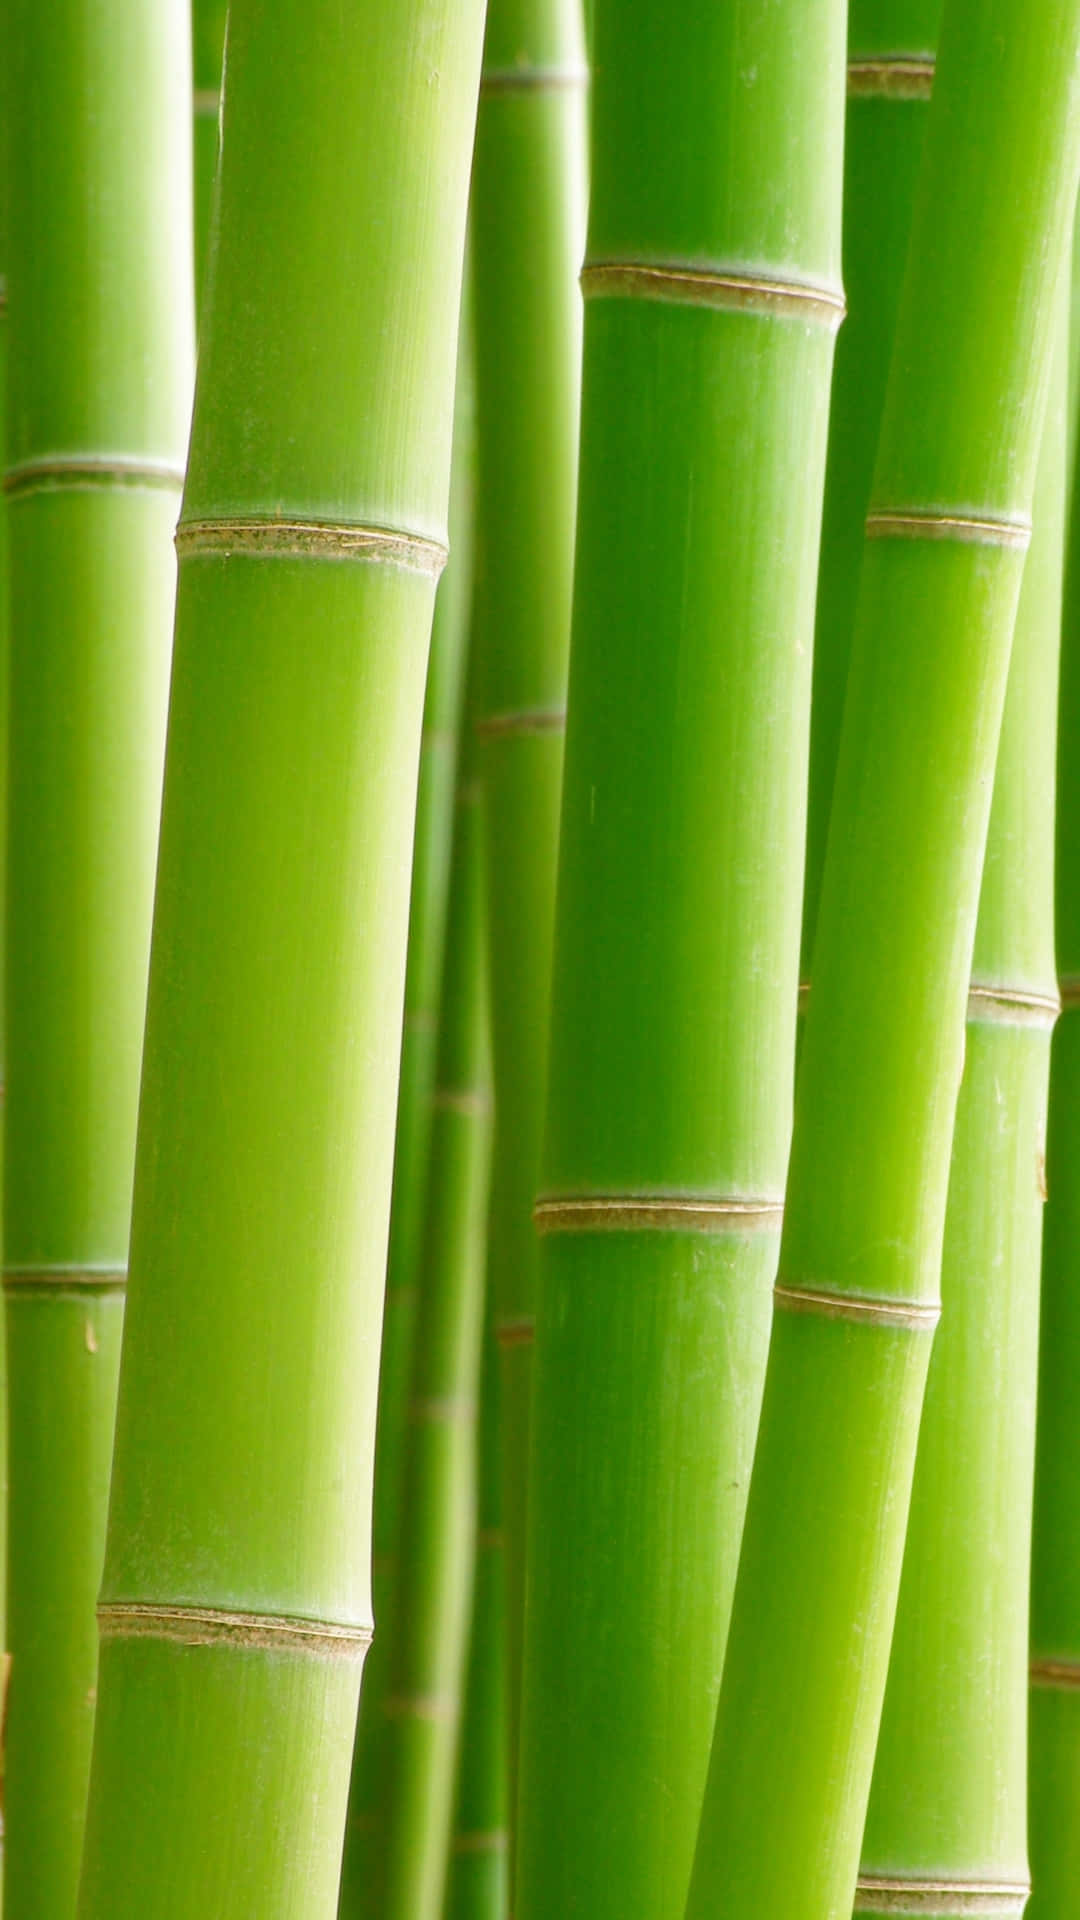 100+] Bamboo Phone Wallpapers